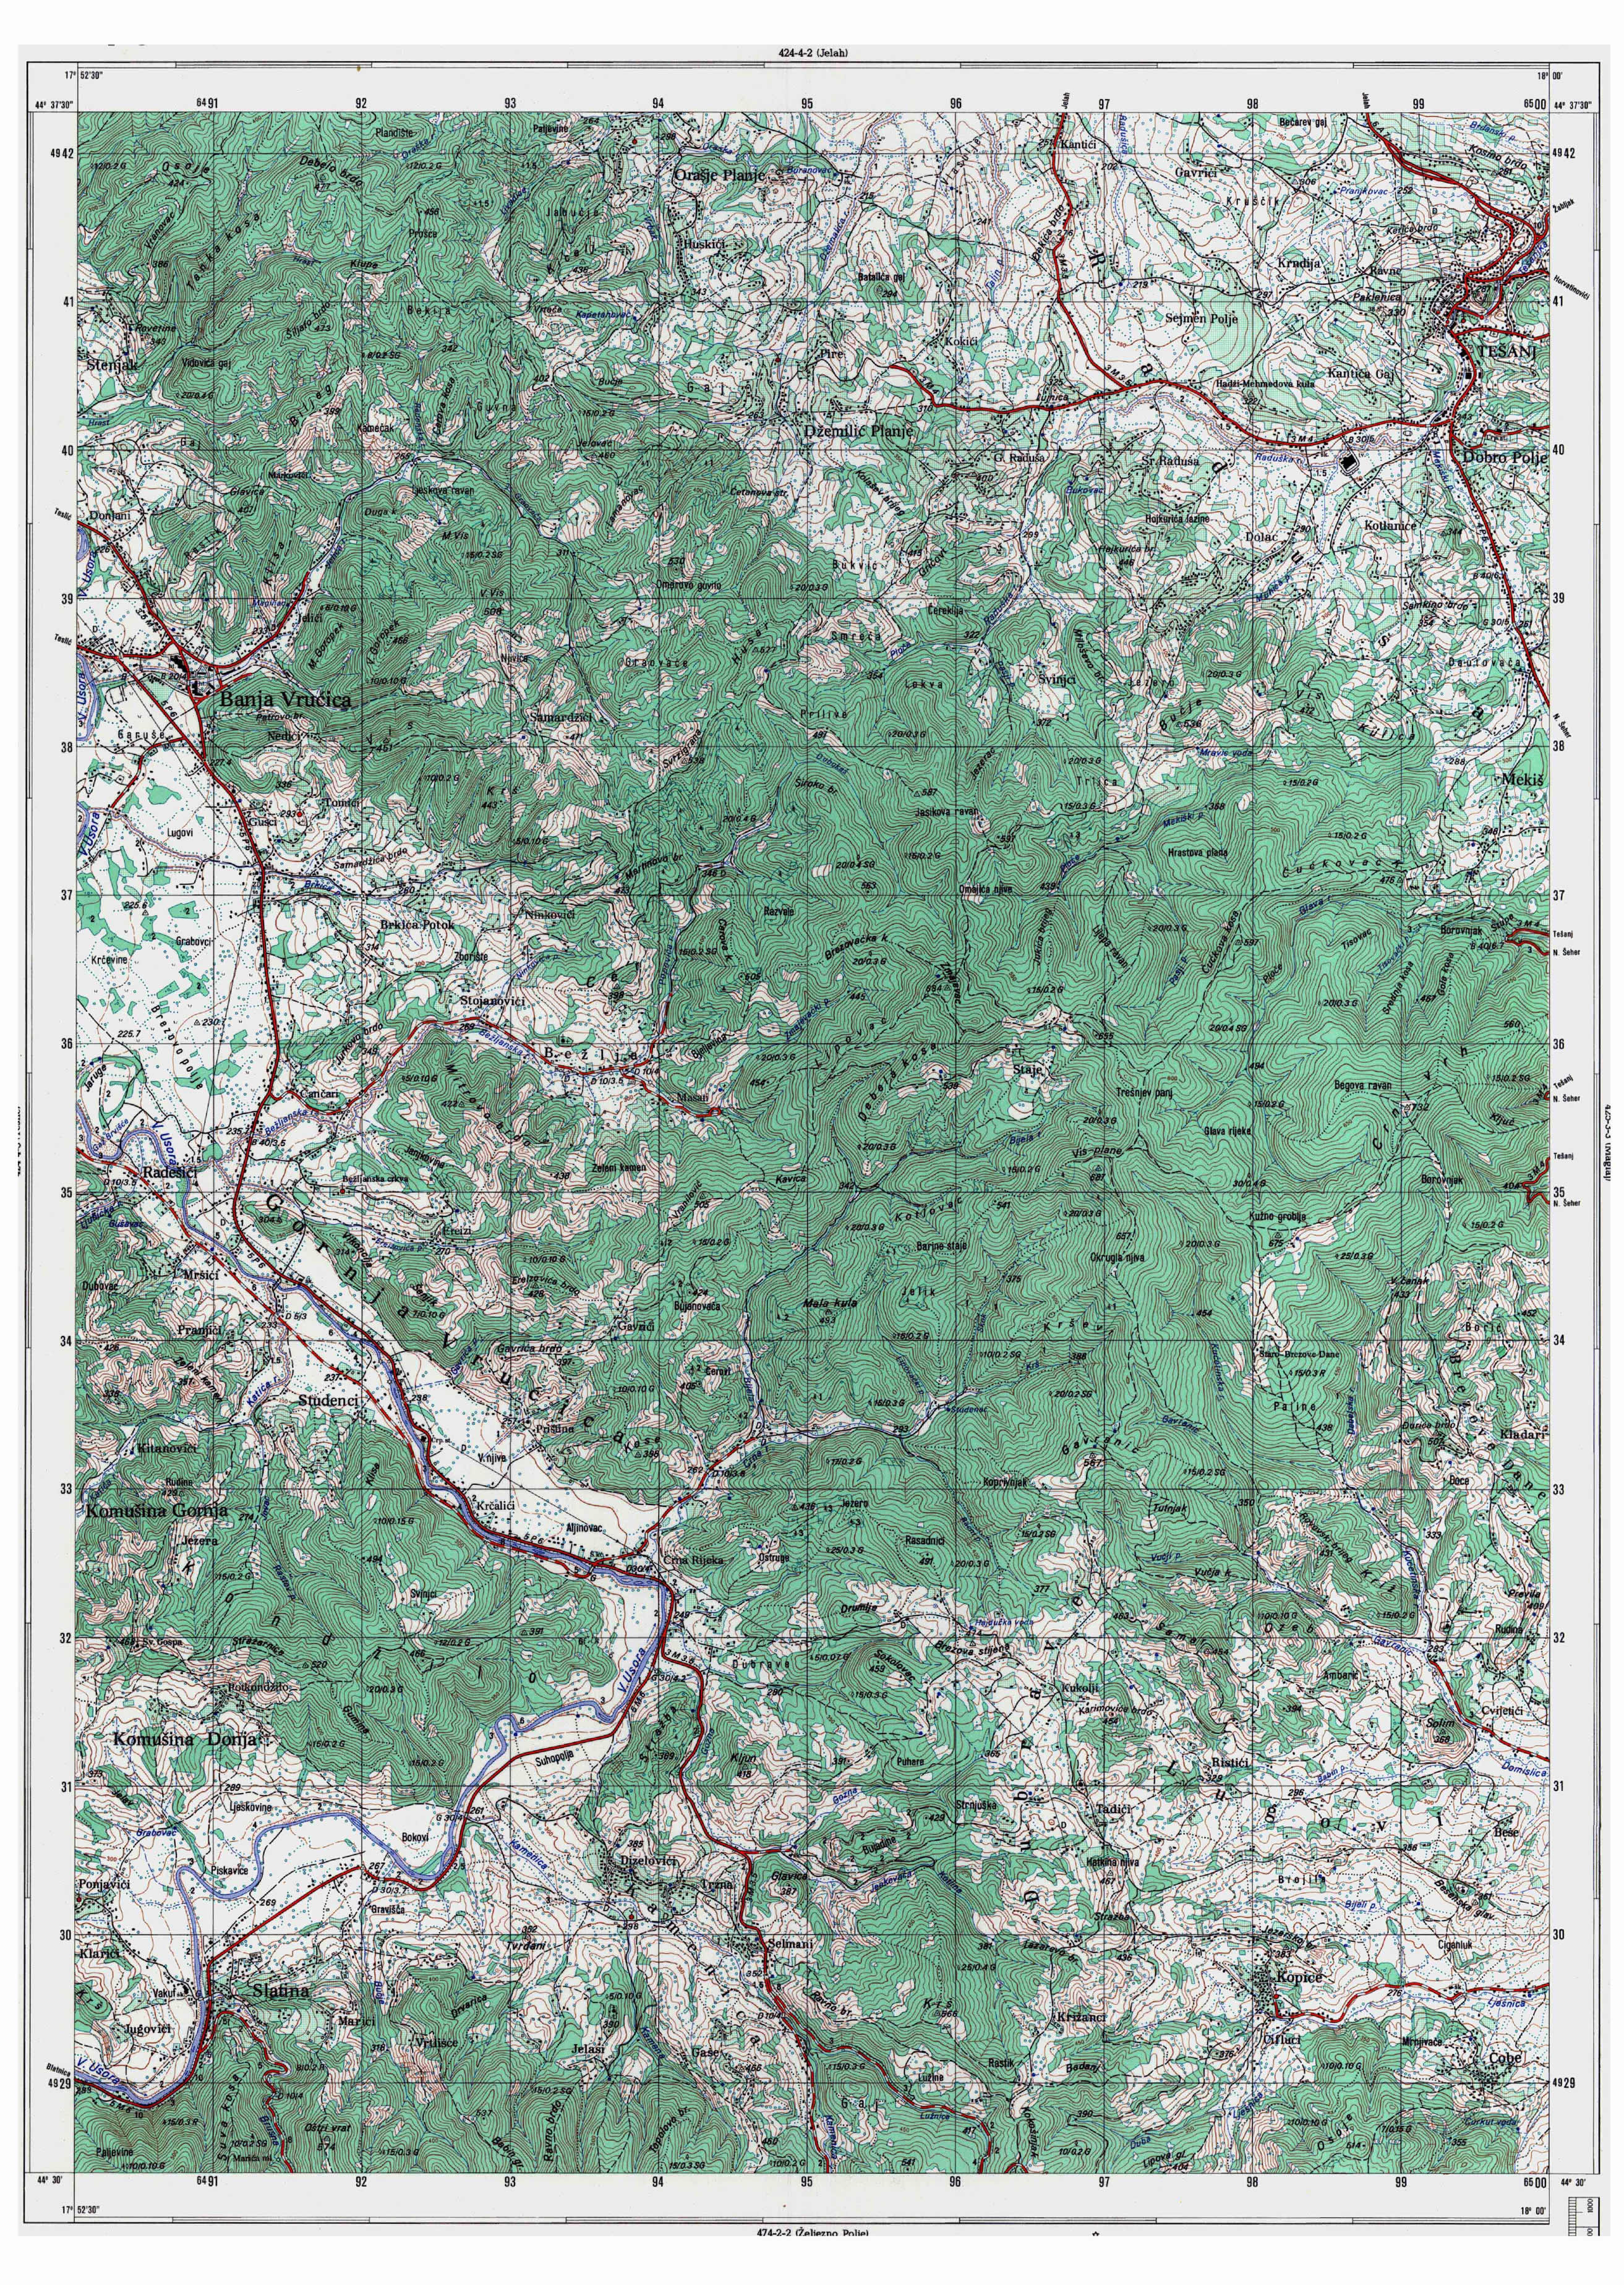  topografska karta BiH 25000 JNA  tesanj